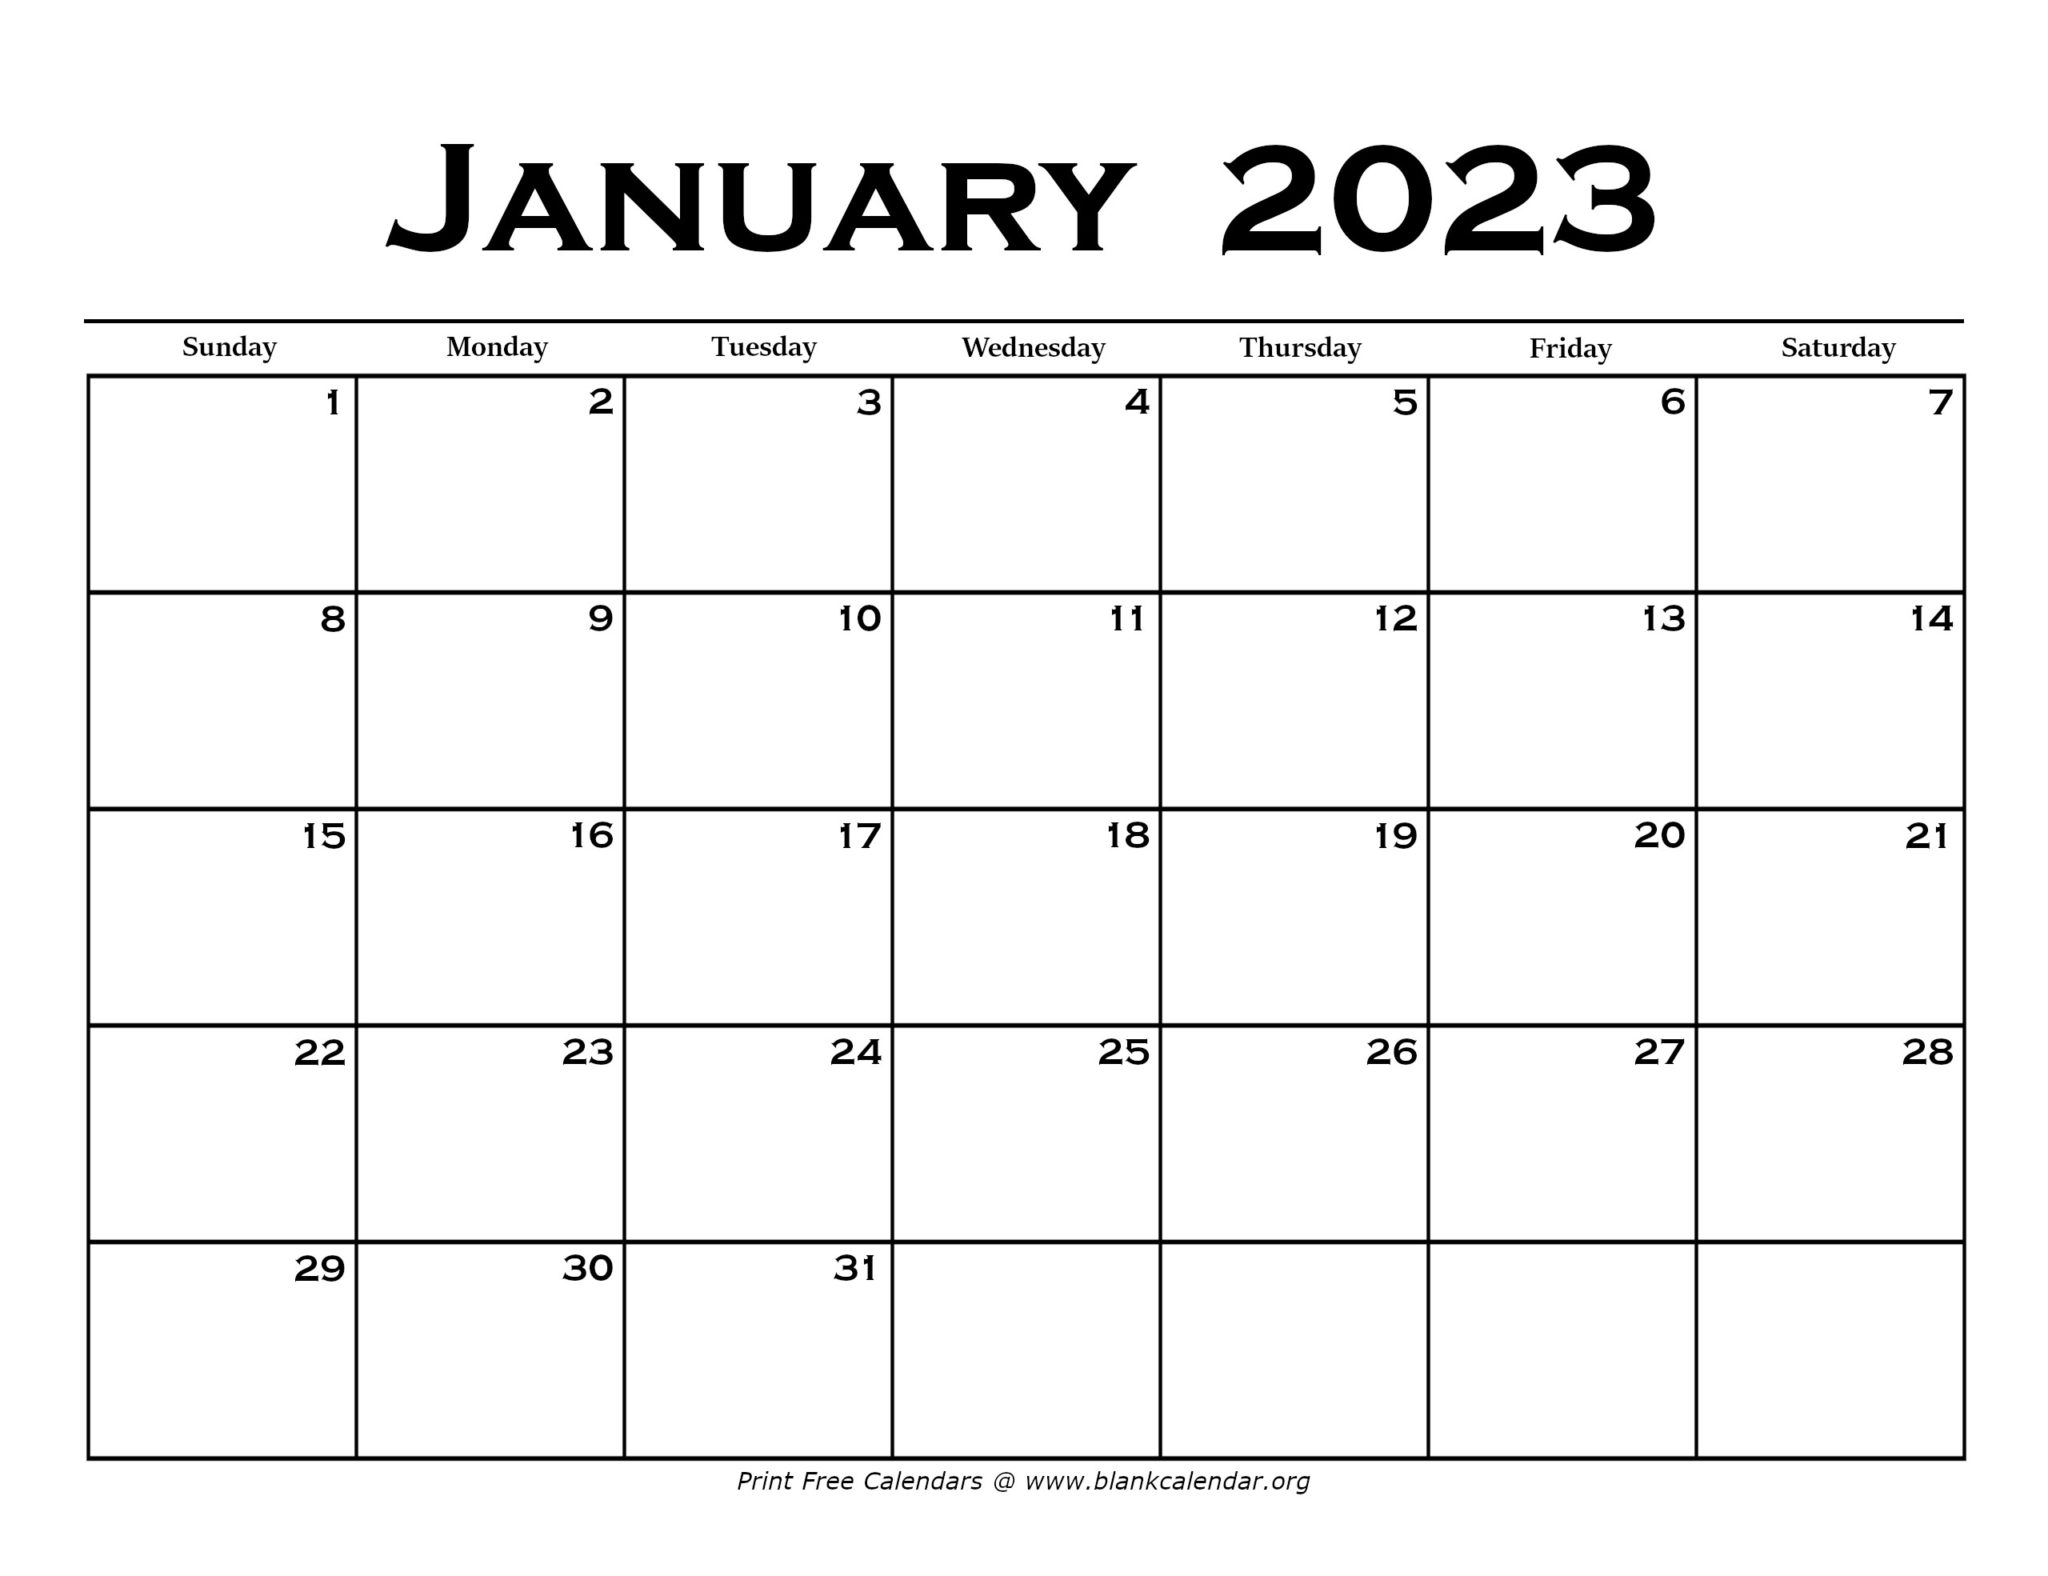 January 2023 Calendar Blank Calendar 9475